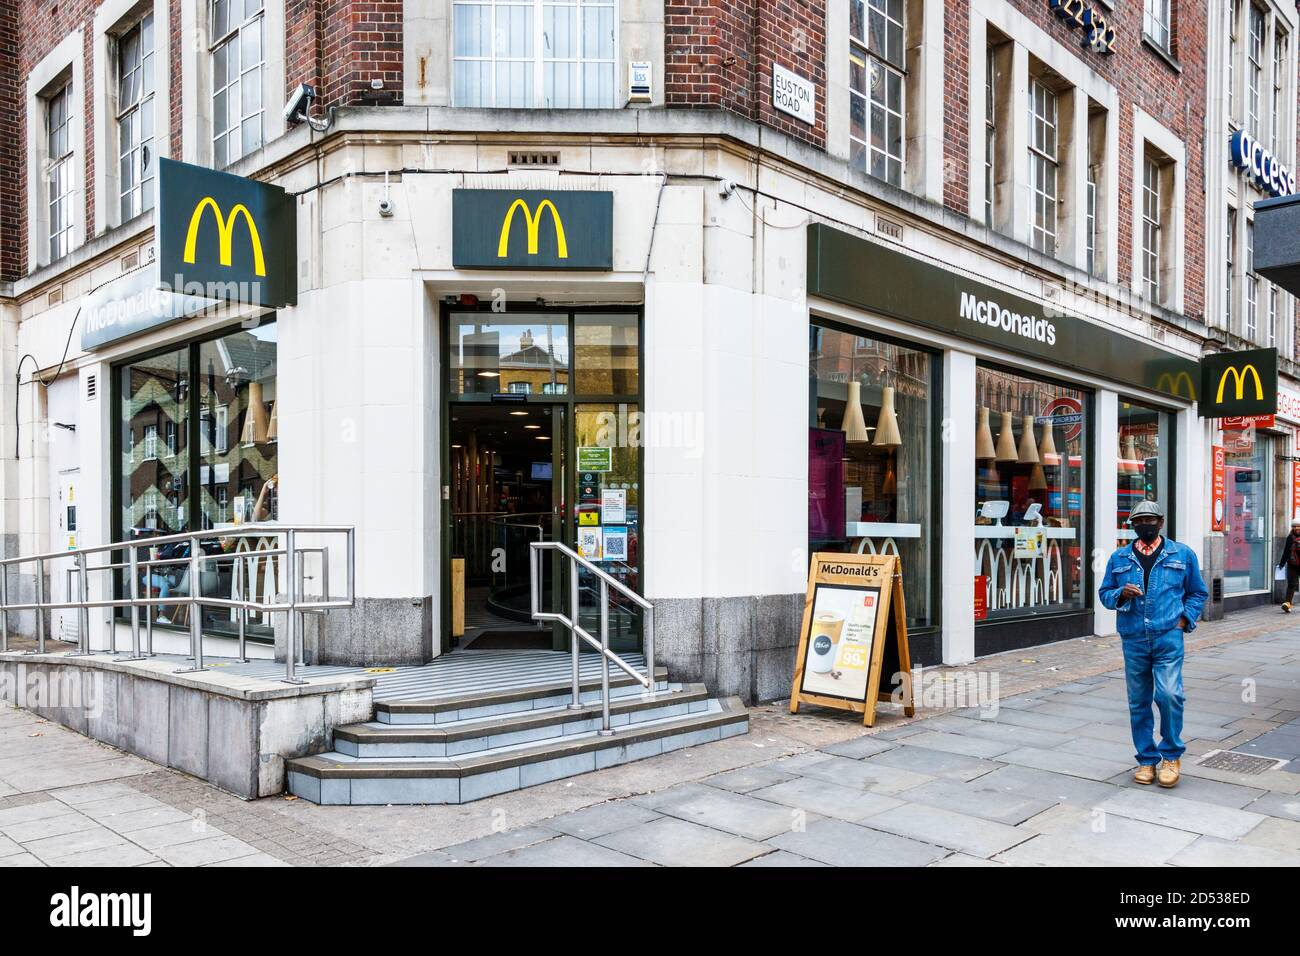 McDonald's Restaurant on Euston Road, King's Cross, London, UK Stock Photo